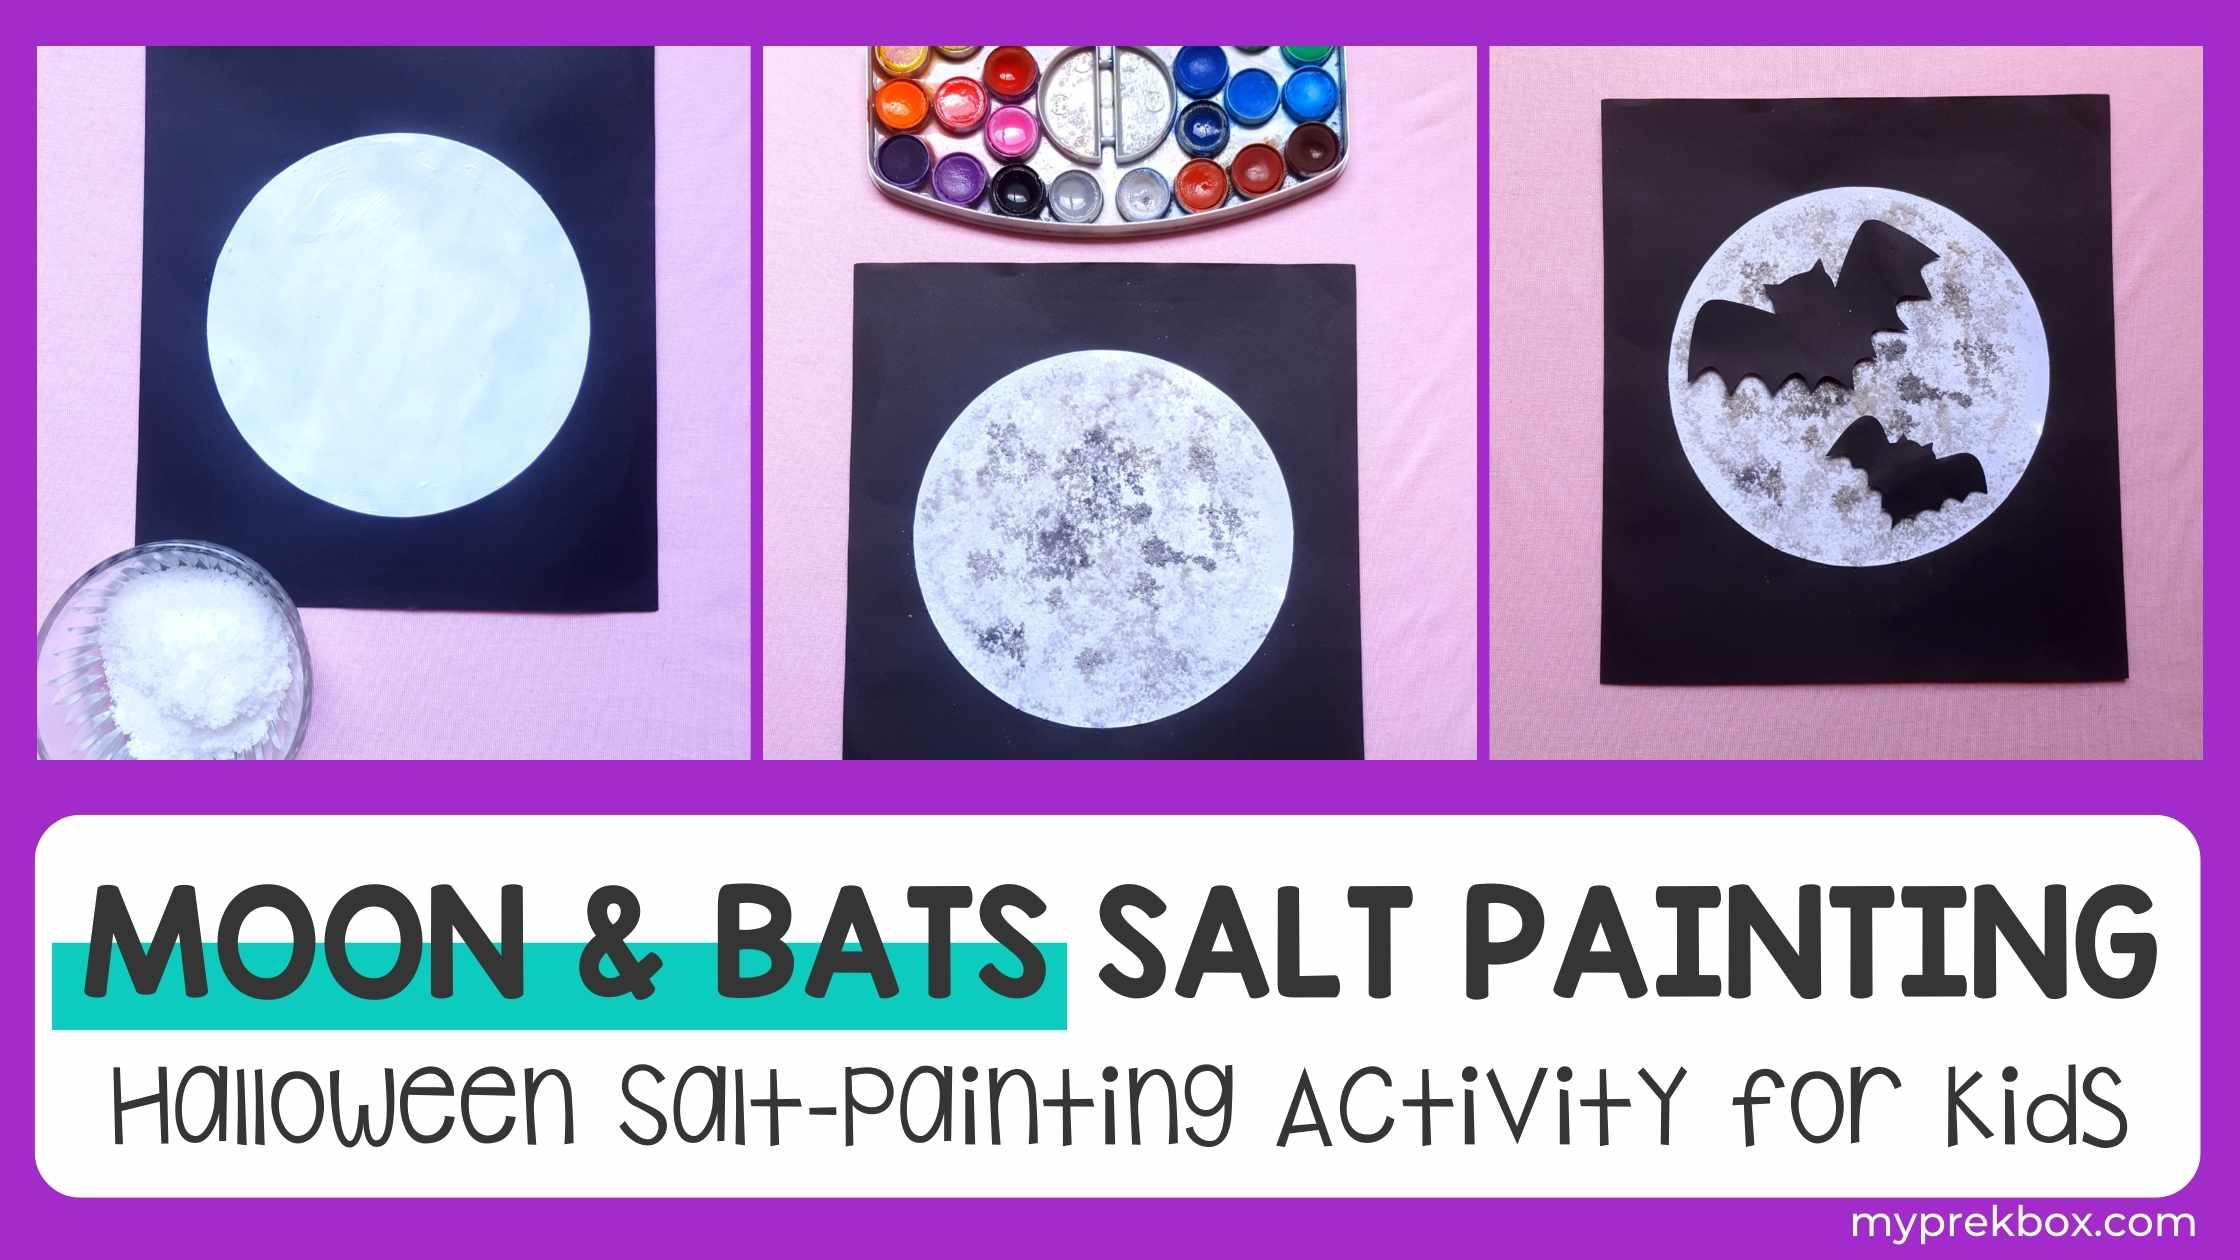 Moon and Bats Salt Painting